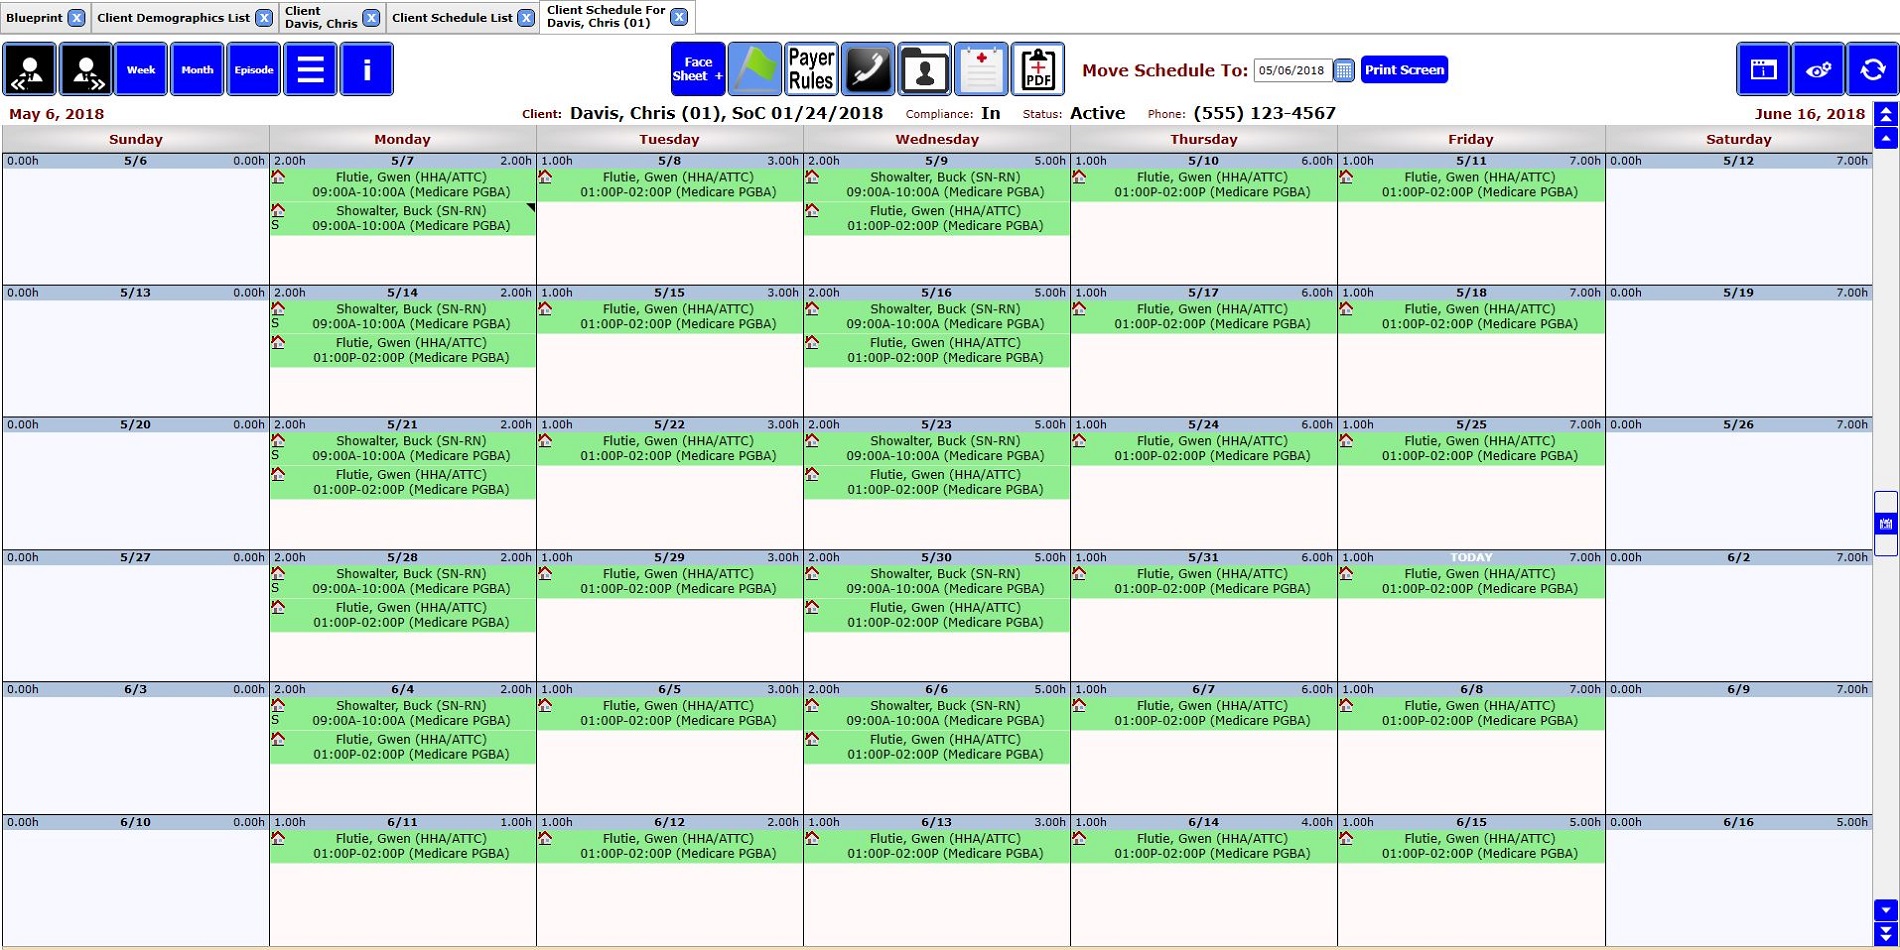 Client schedule page